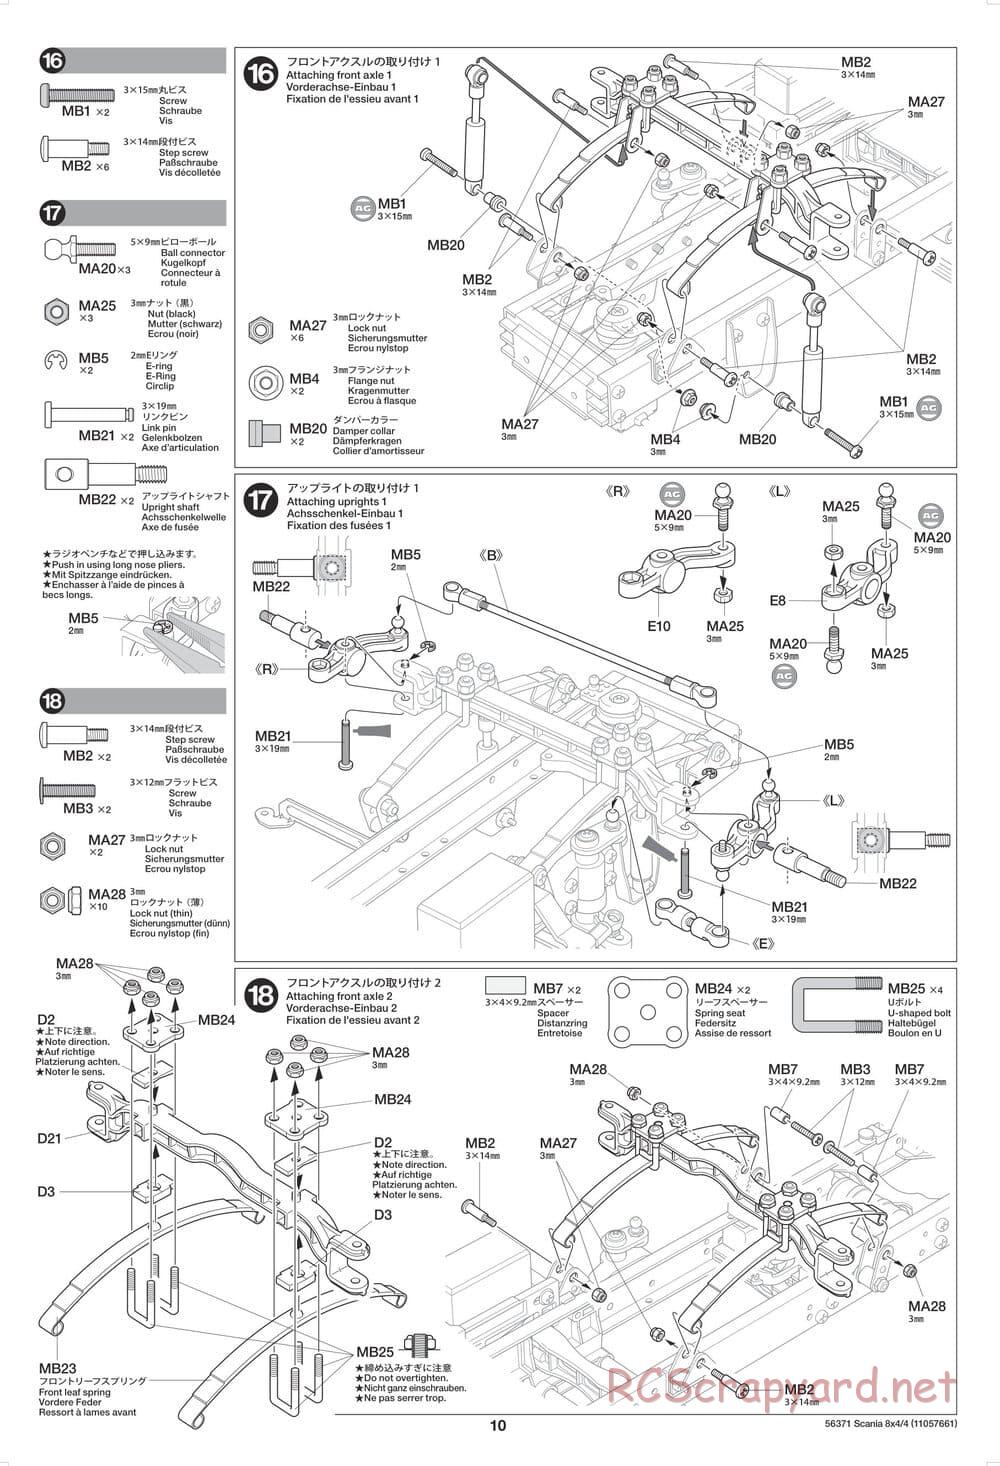 Tamiya - Scania 770 S 8x4/4 Chassis - Manual - Page 10